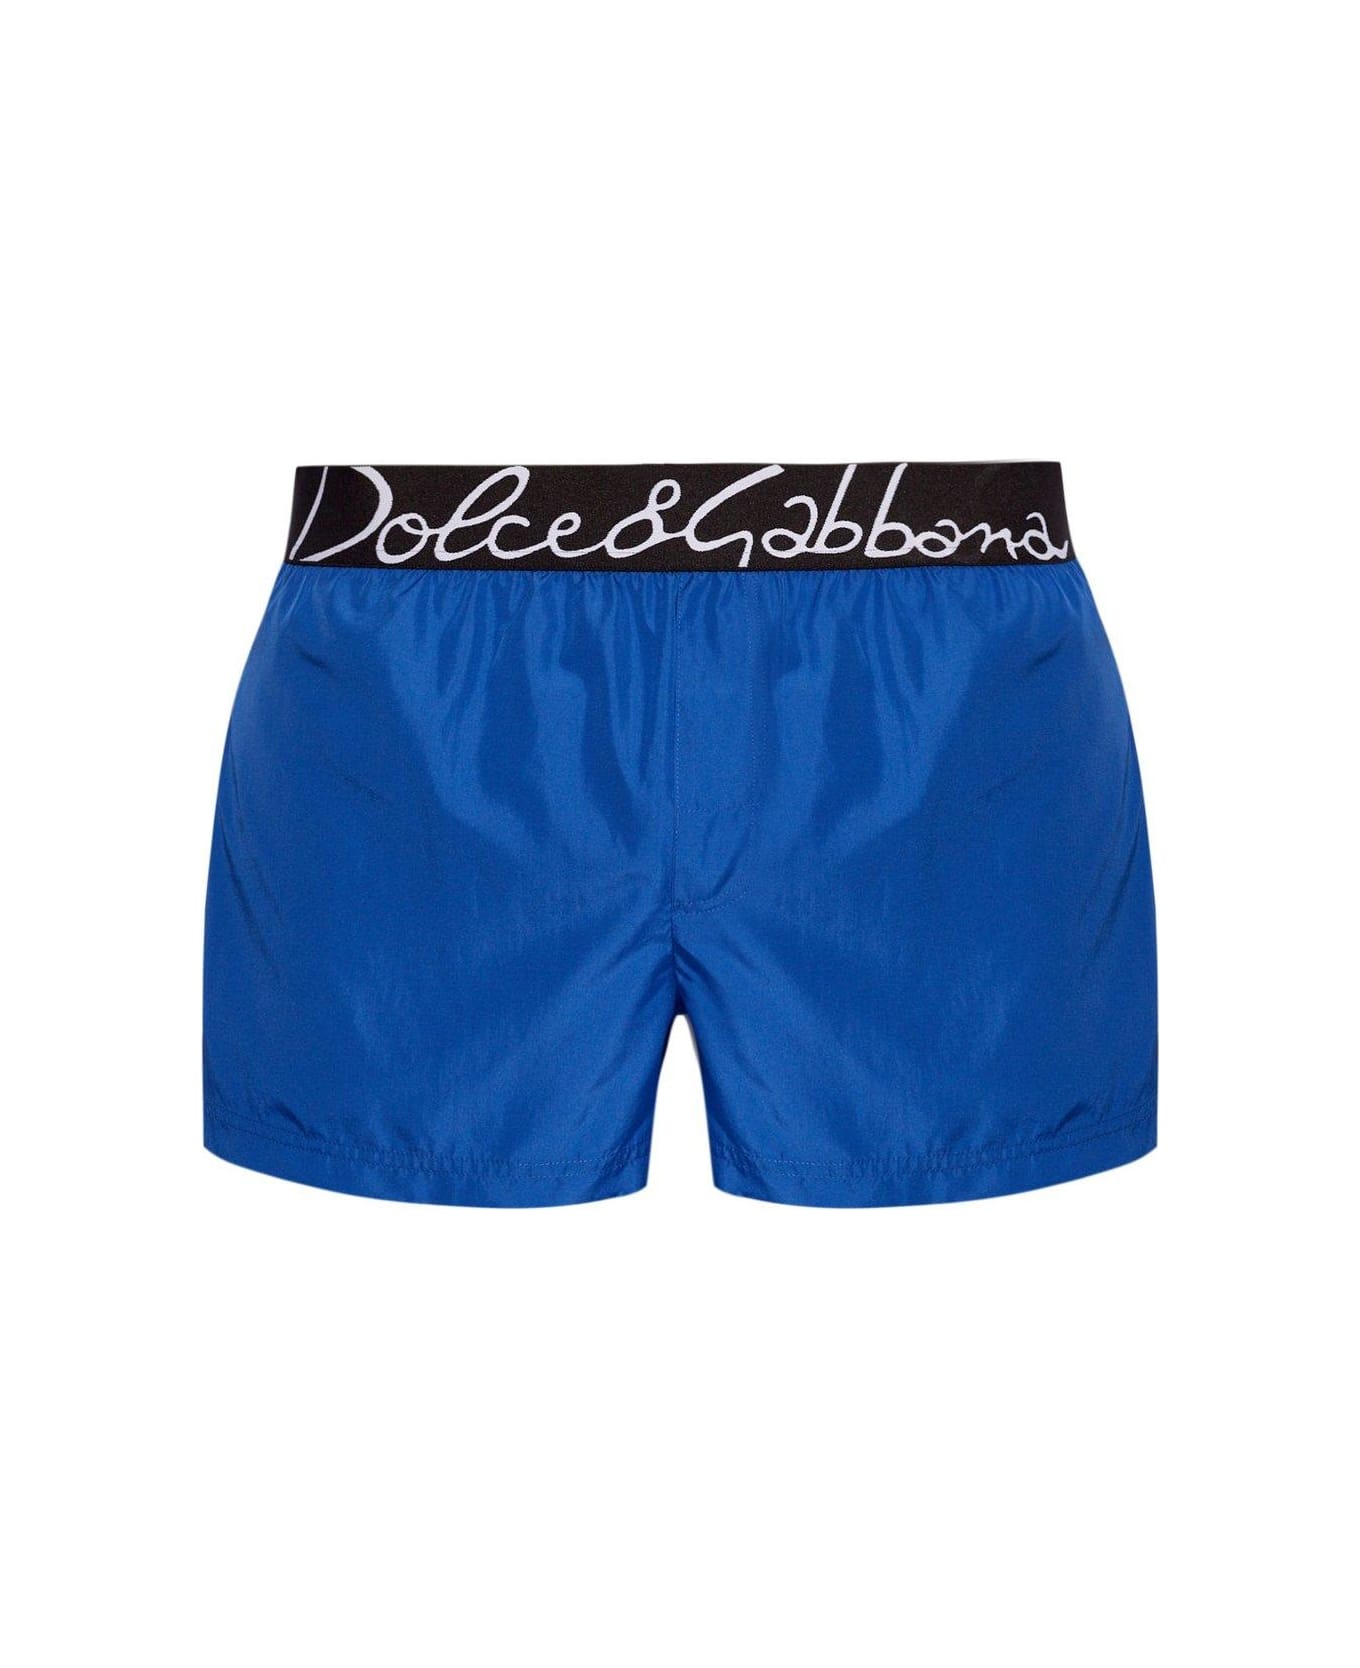 Dolce & Gabbana Swim Trunks - Blu